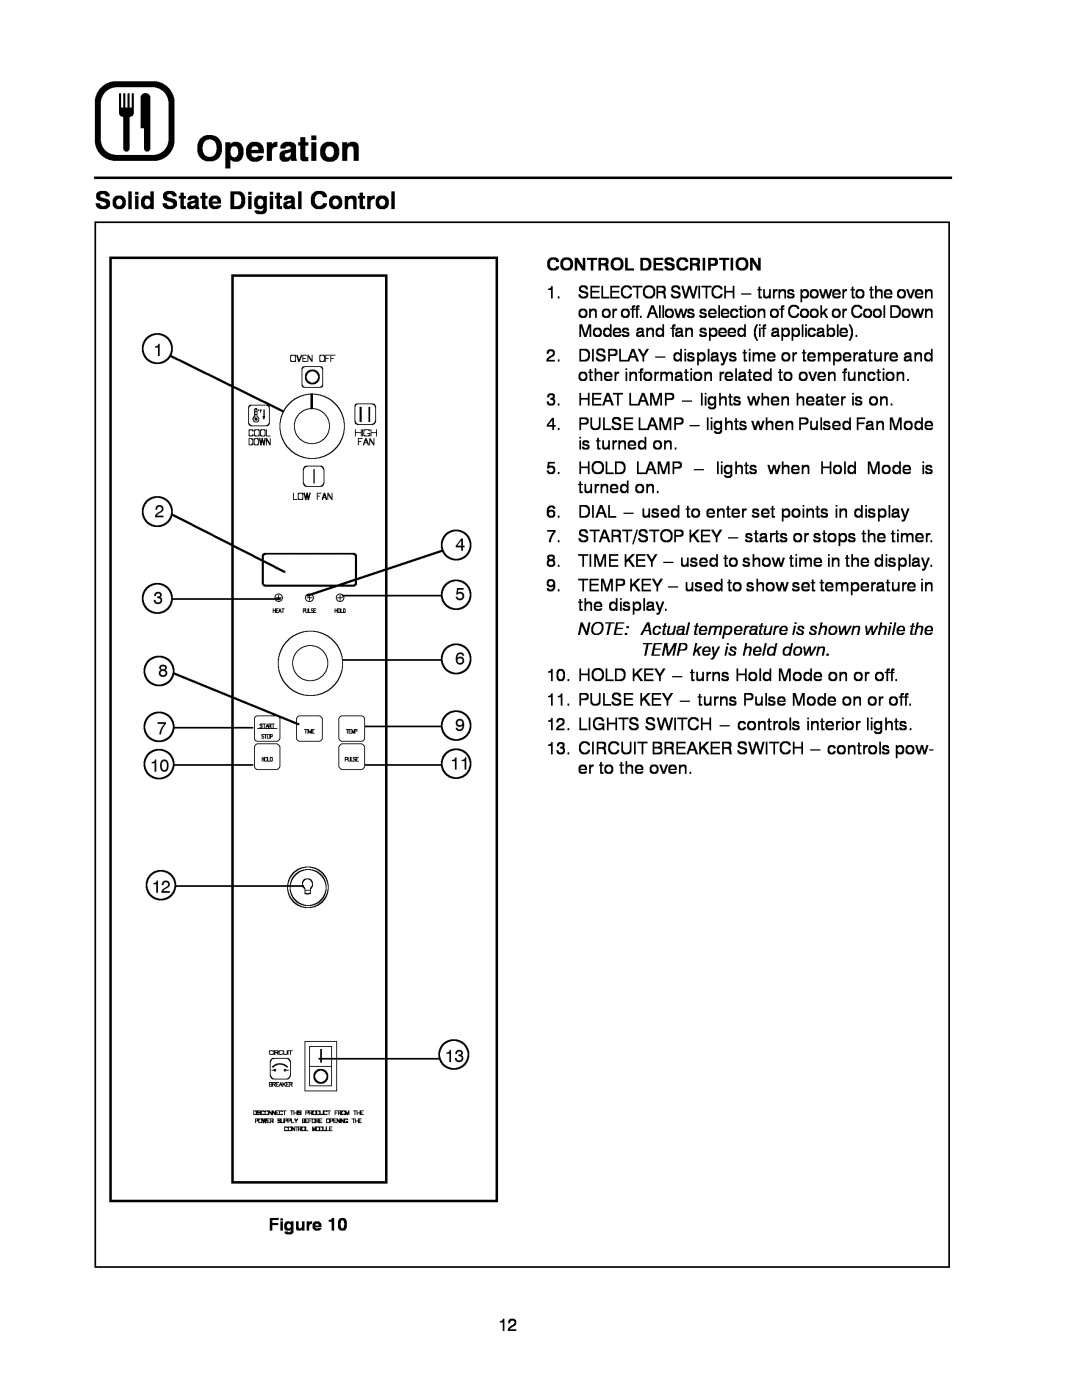 Blodgett MARK V XCEL CONVECTION OVEN manual Operation, Solid State Digital Control, Control Description 